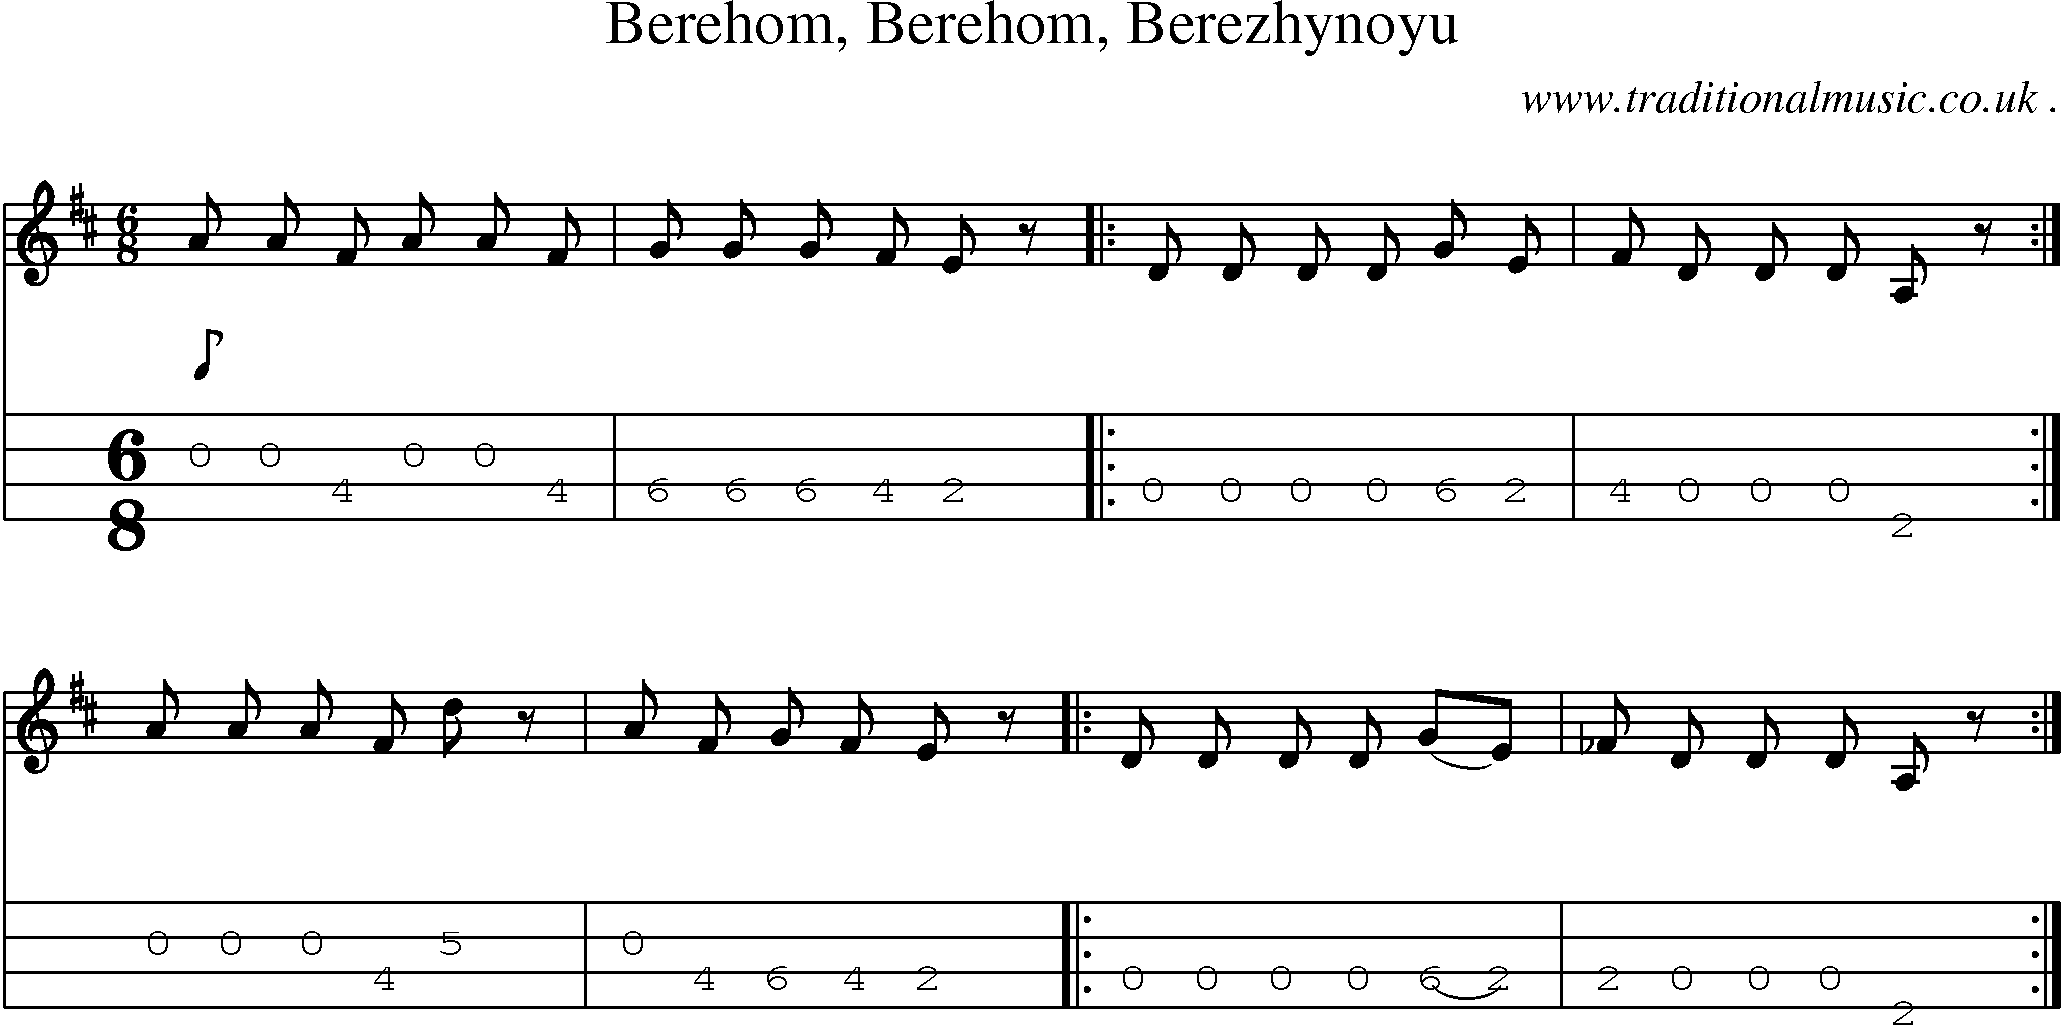 Sheet-Music and Mandolin Tabs for Berehom Berehom Berezhynoyu